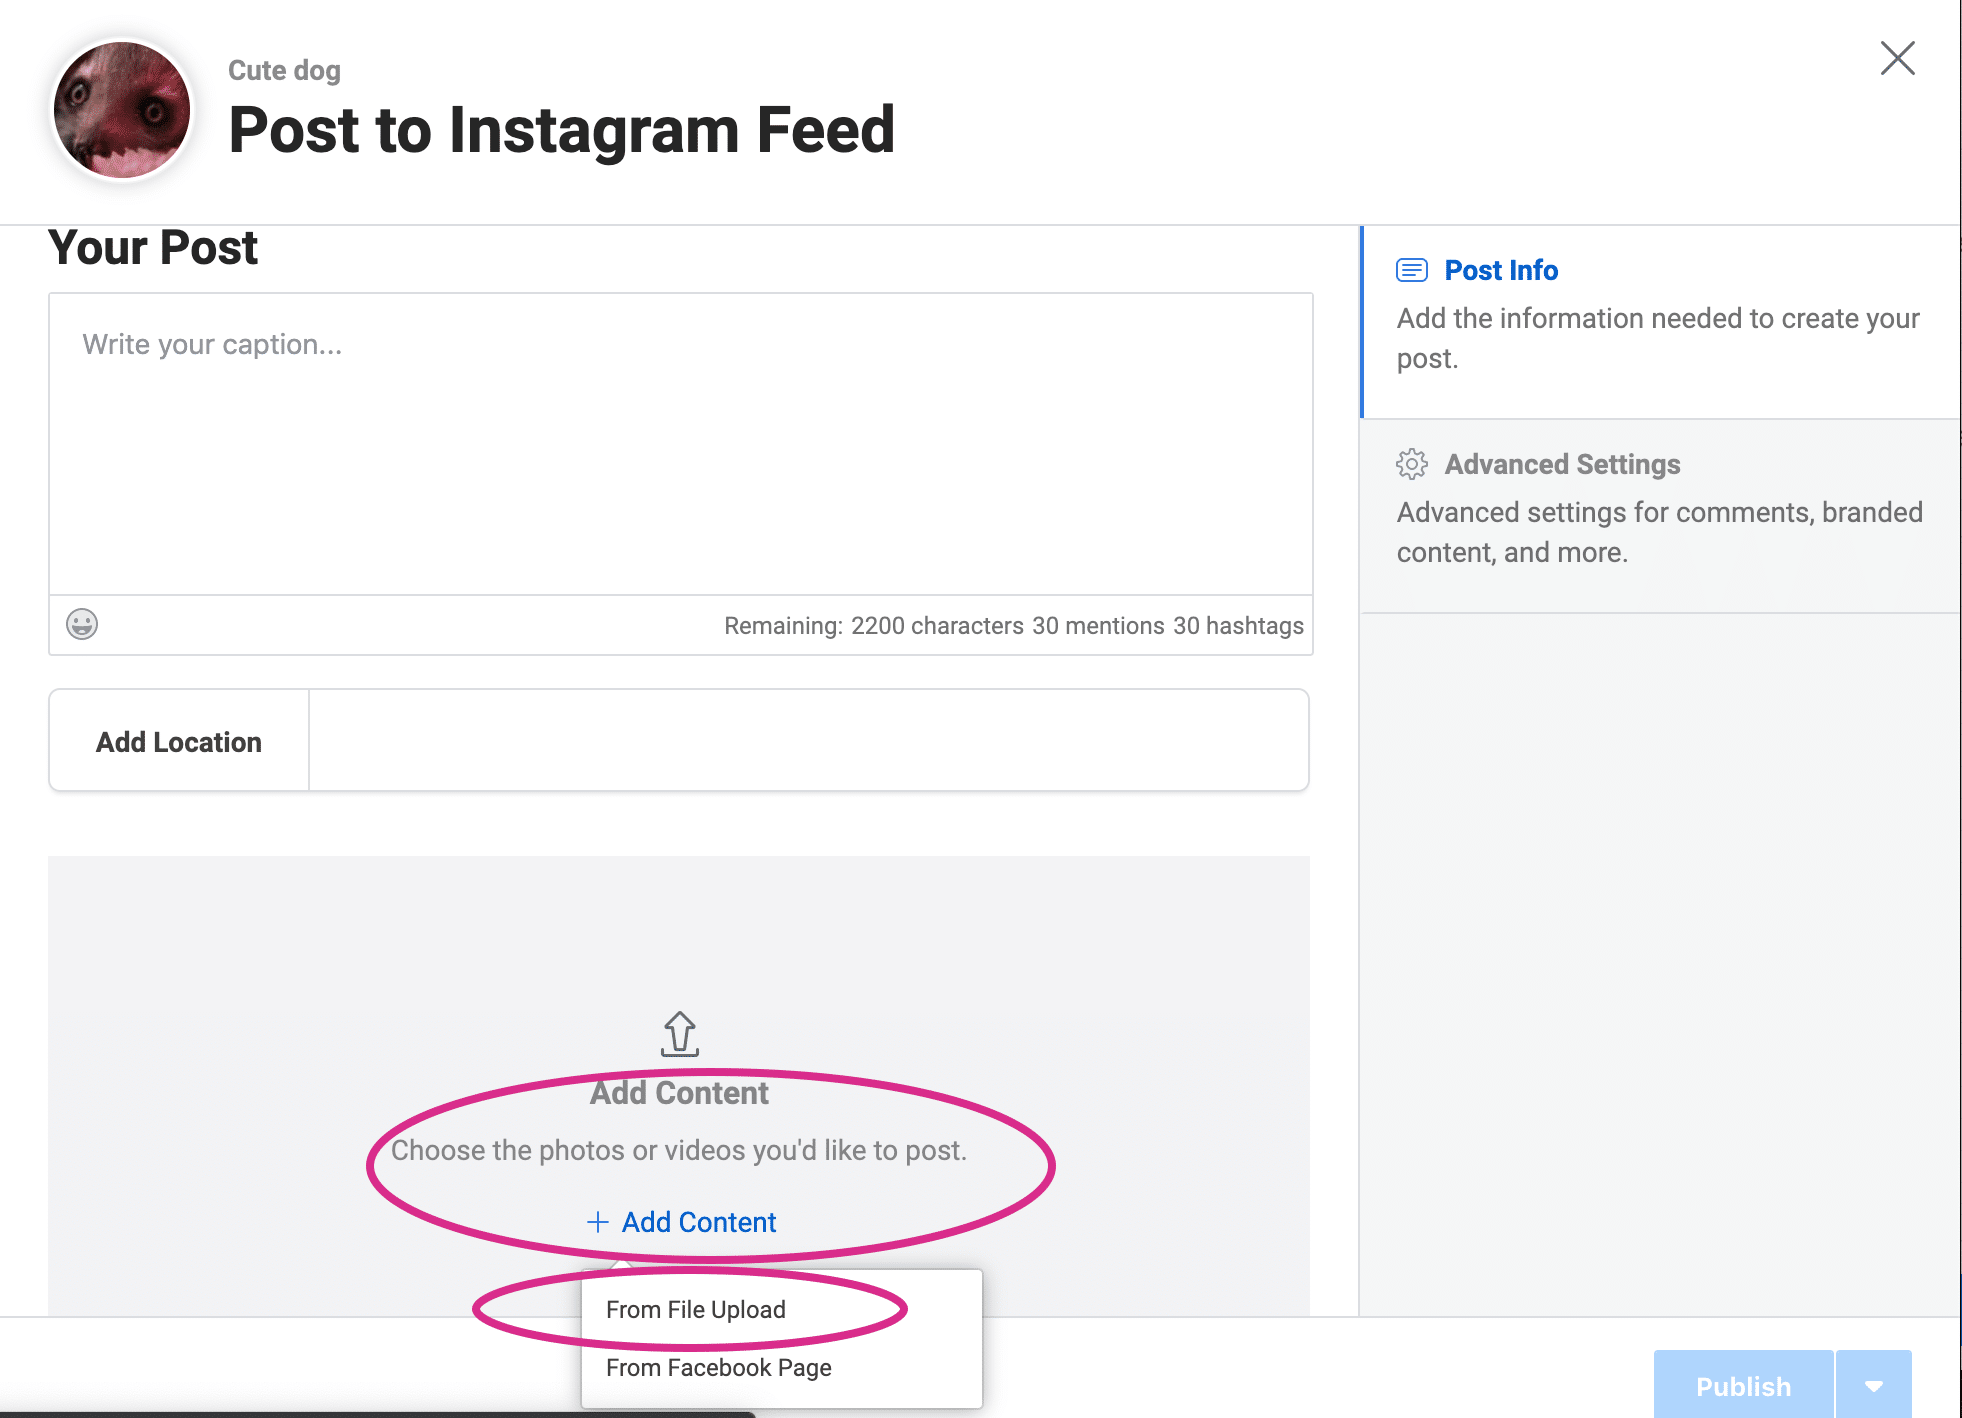 Using Creator Studio to schedule Instagram posts: Add Content to upload visuals